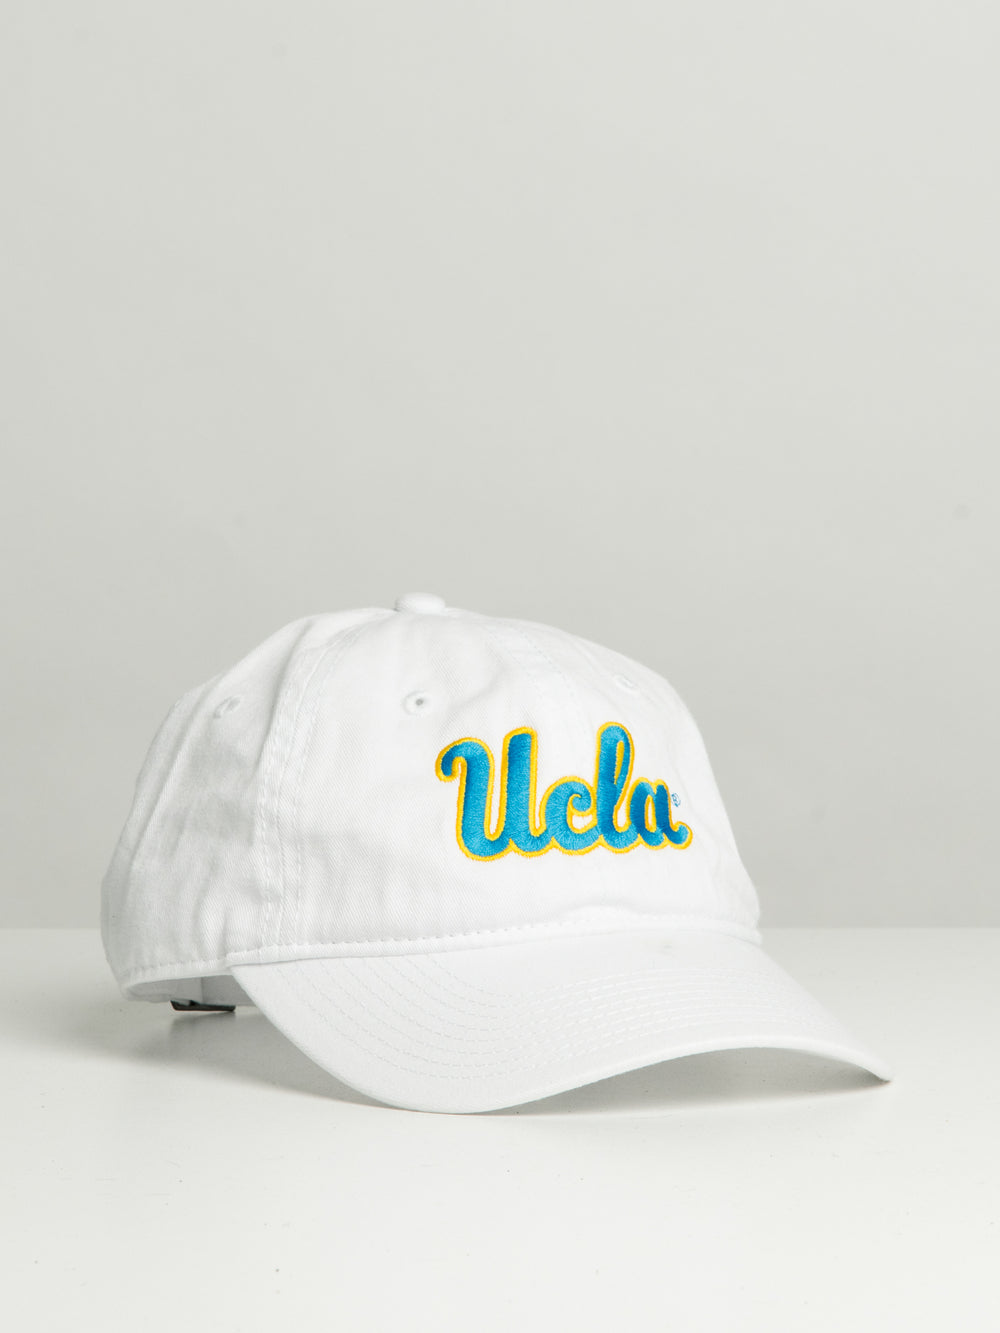 CHAMPION UCLA AJUSTABLE TWILL HAT - CLEARANCE